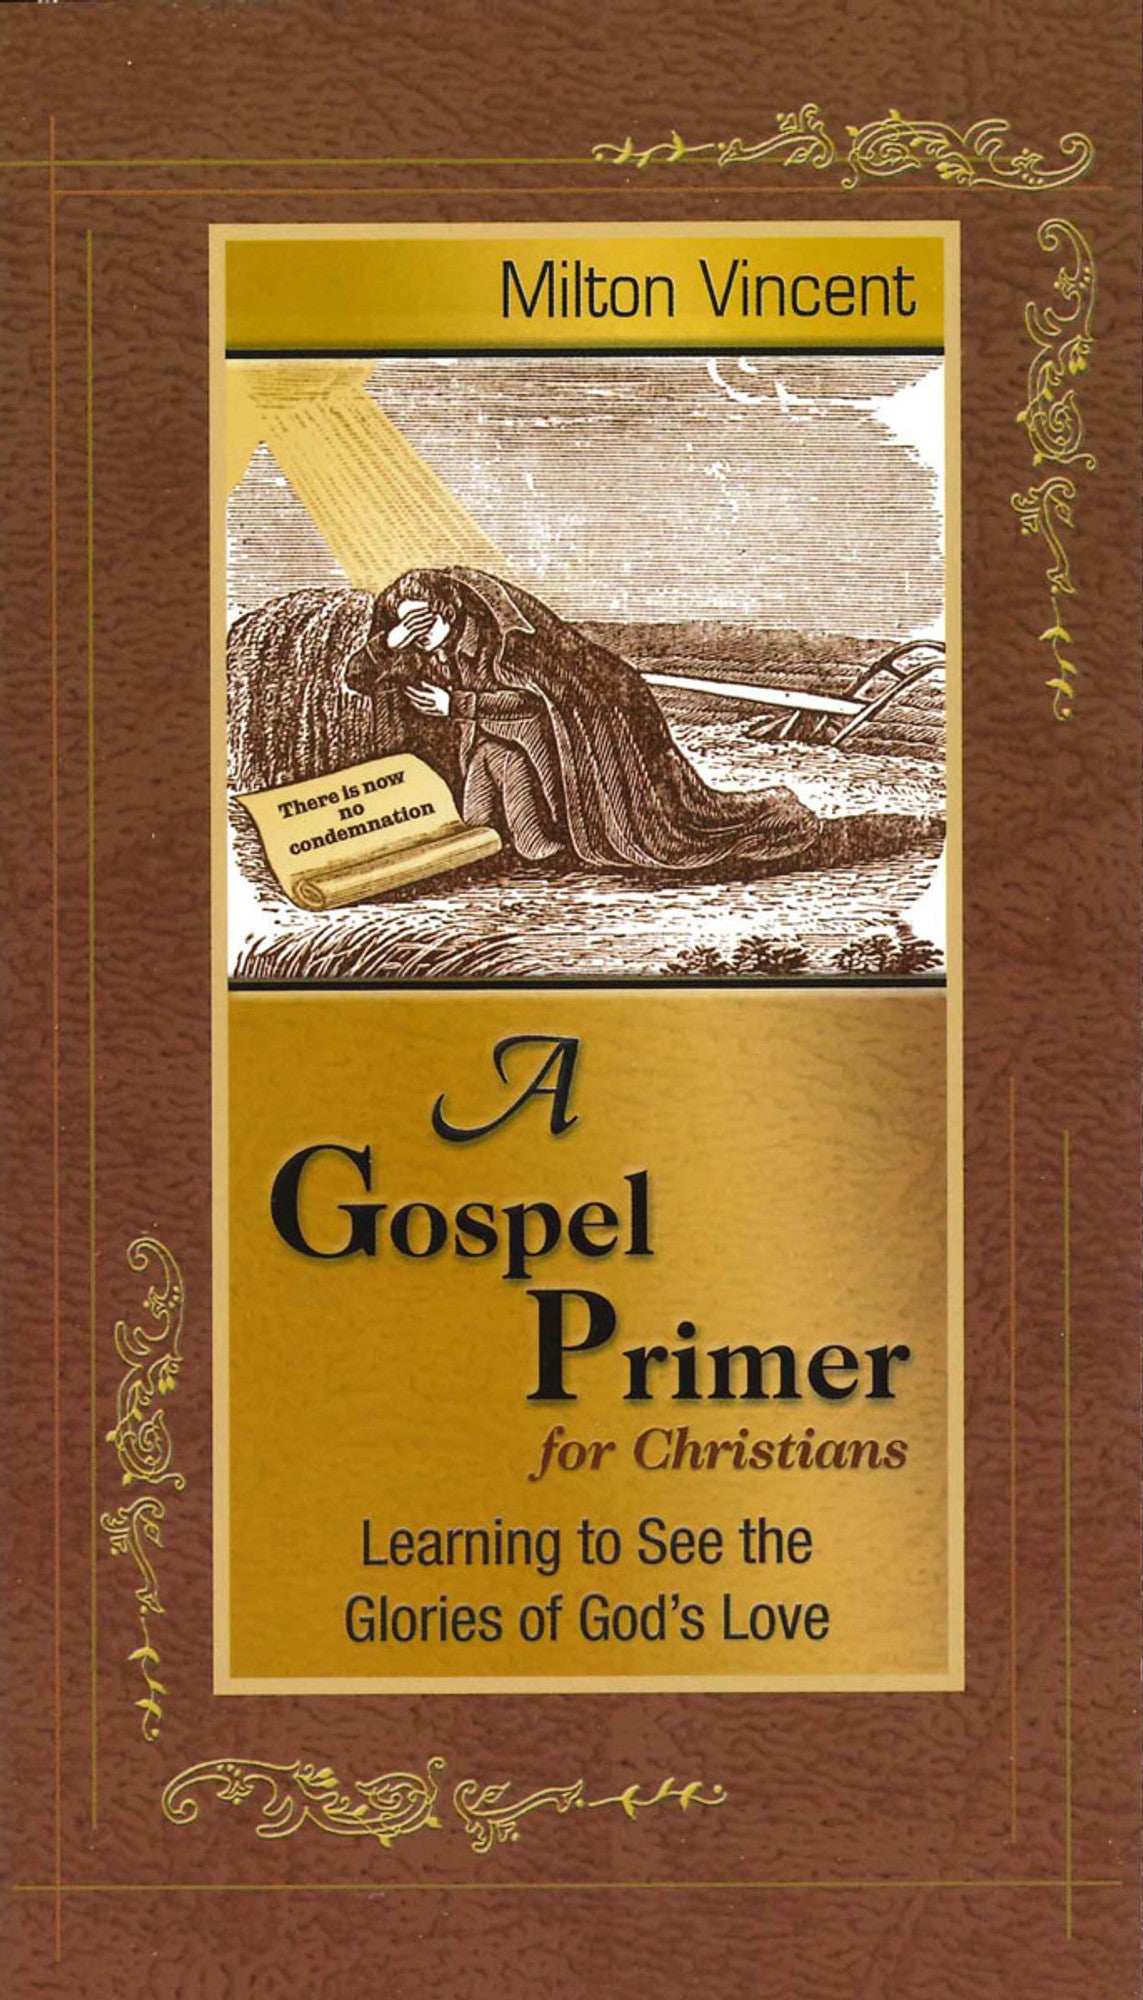 A Gospel Primer for Christians  Mini Prose by Milton Vincent - Mini Book